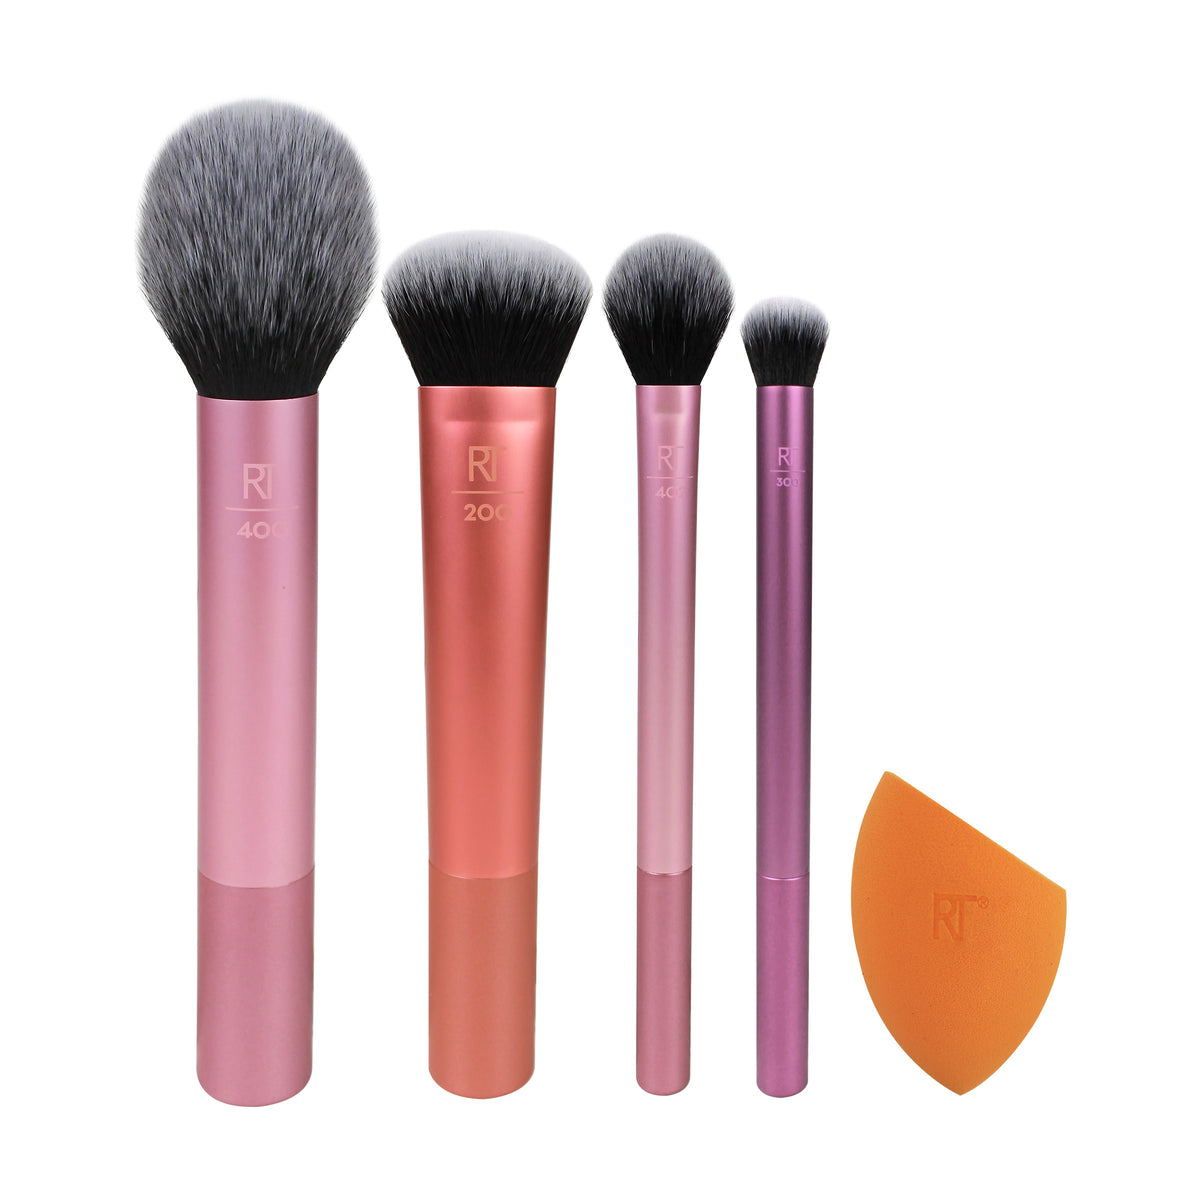 Bachelor Erupt Korean Everyday Essentials Makeup Brush Set | RealTechniques.com